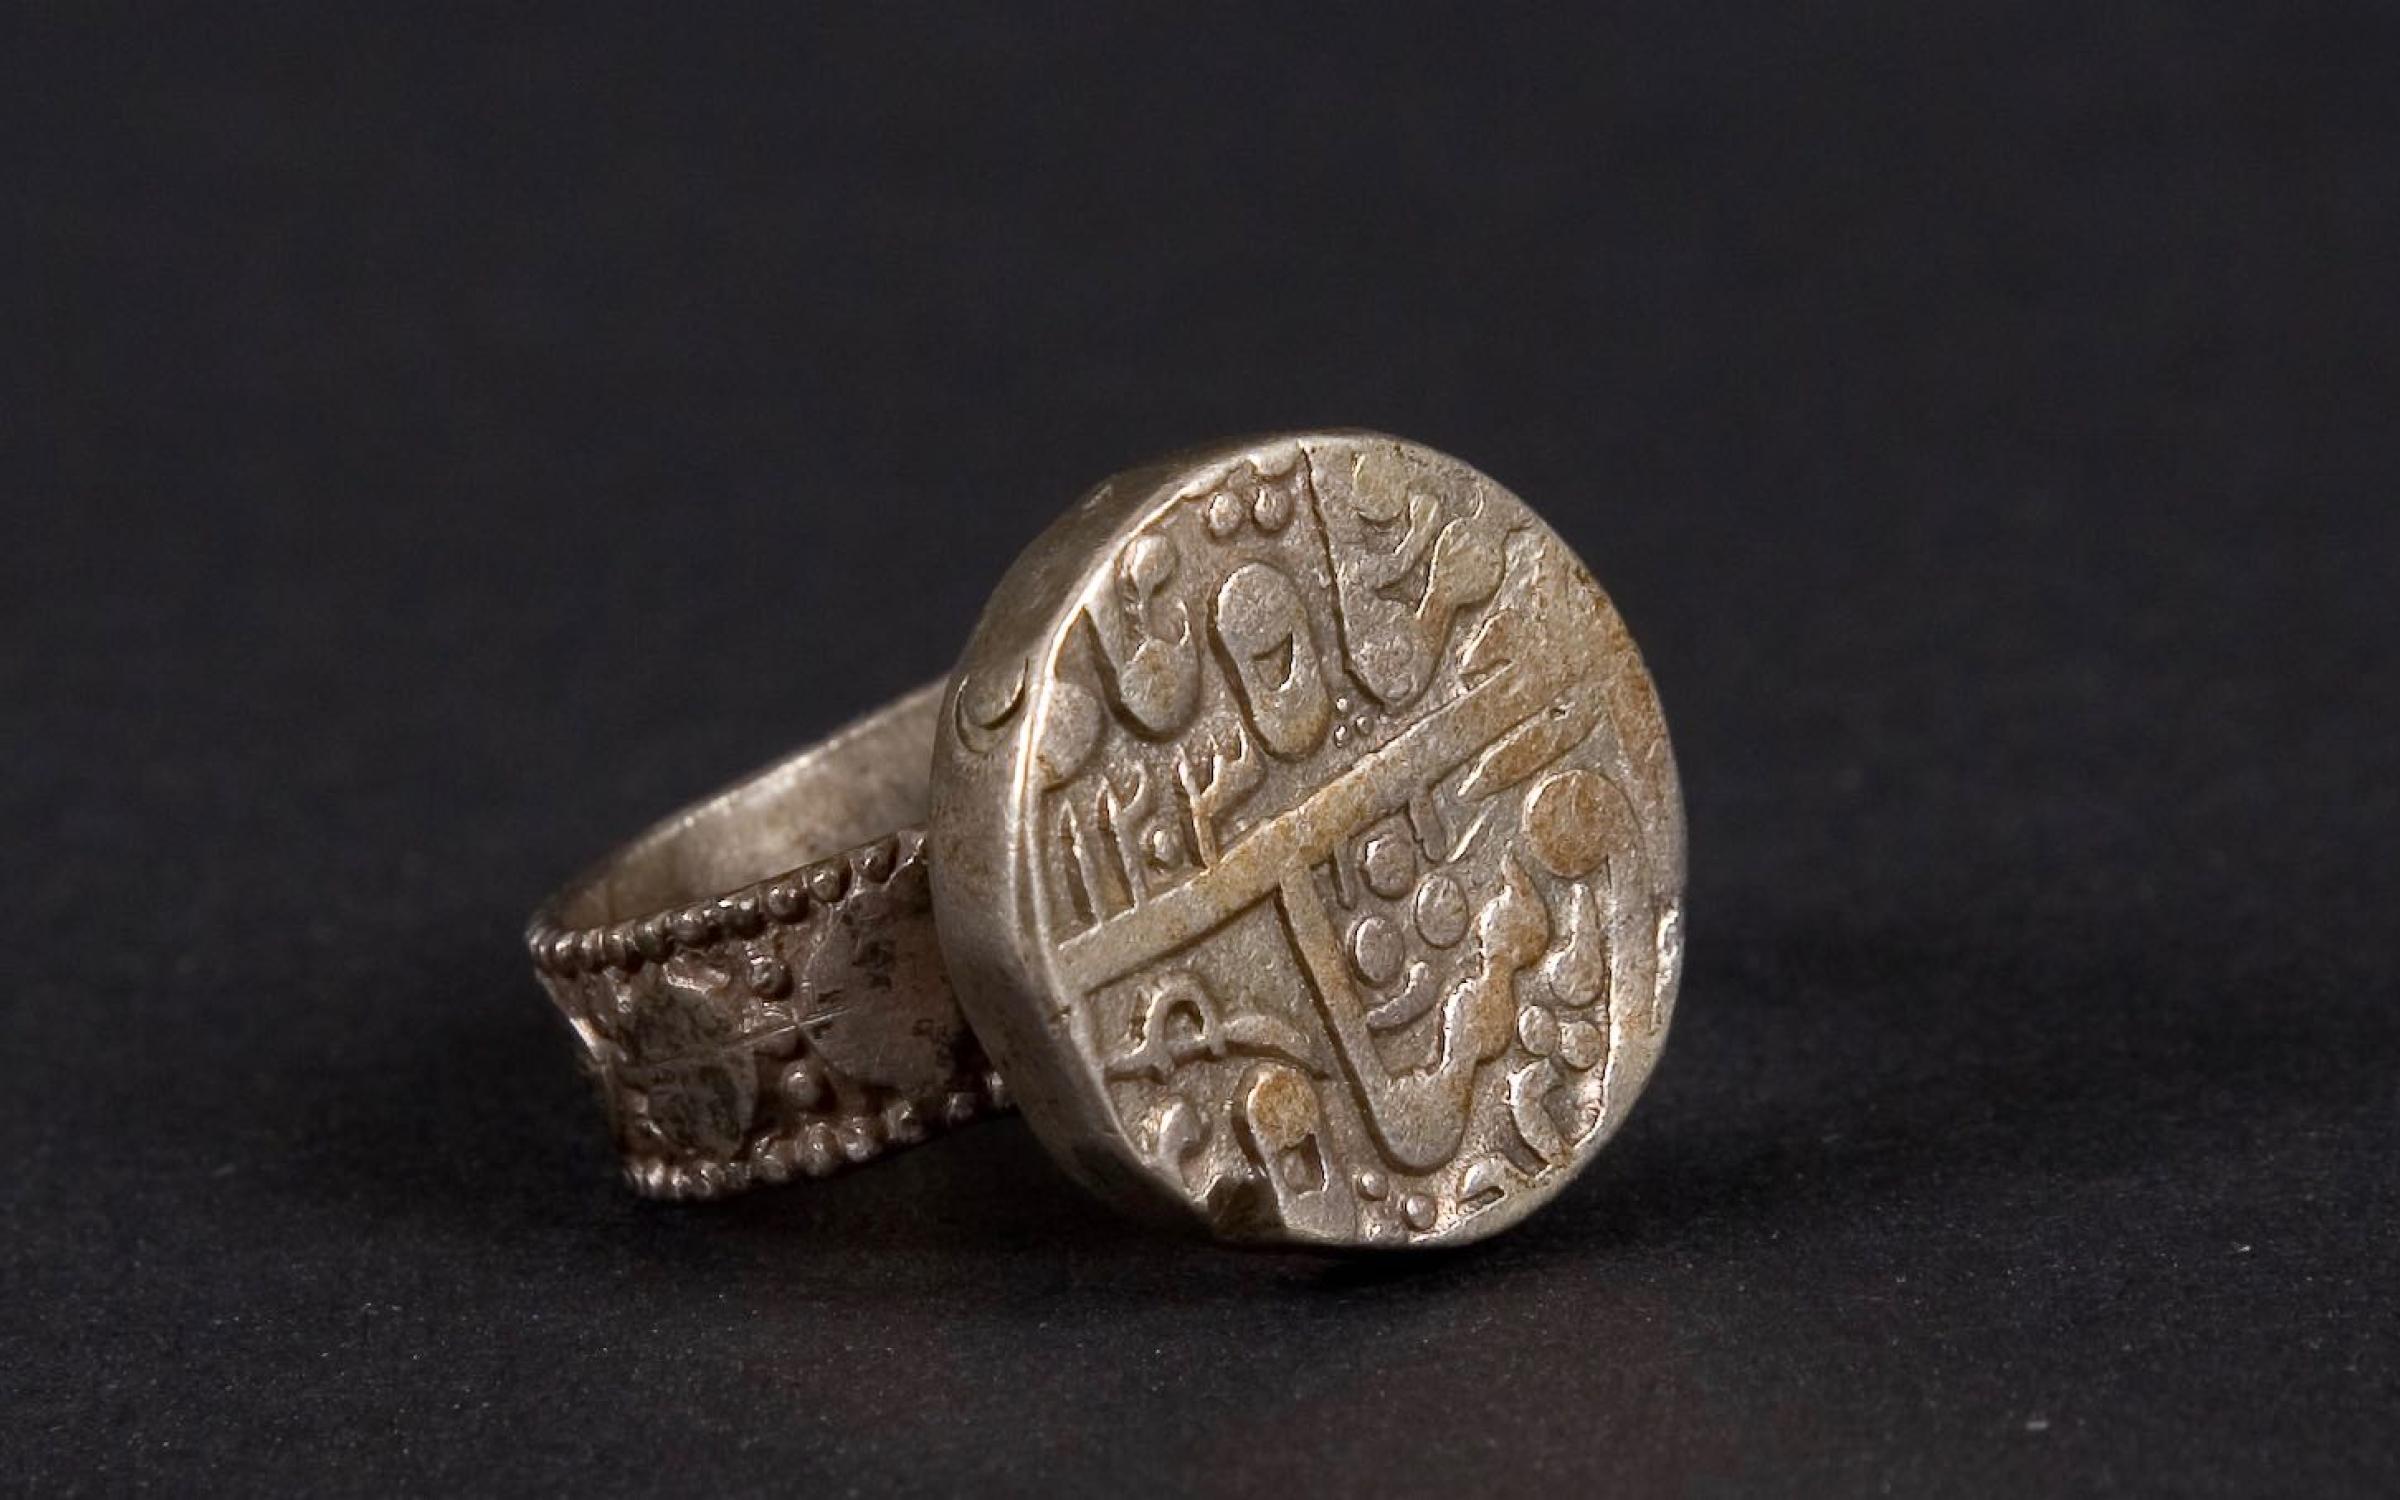 Irag Coin Ring, 1788